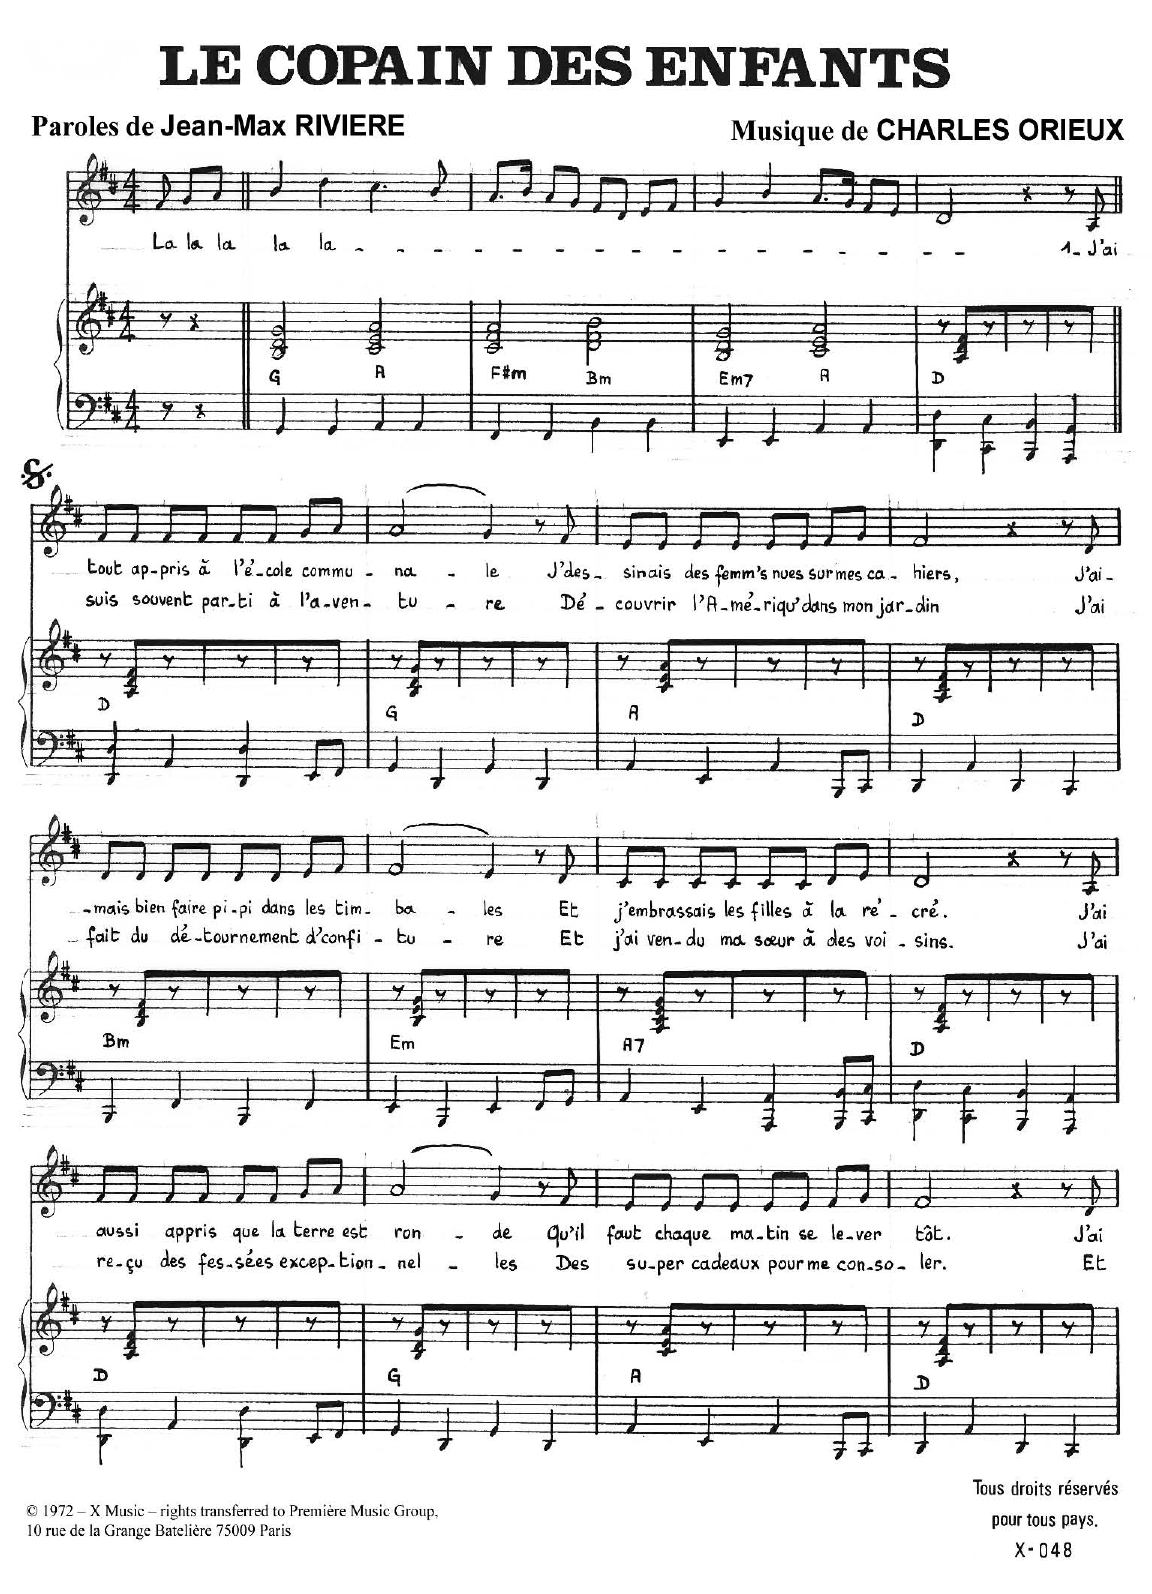 Carlos Le Copains Des Enfants Sheet Music Notes & Chords for Piano & Vocal - Download or Print PDF